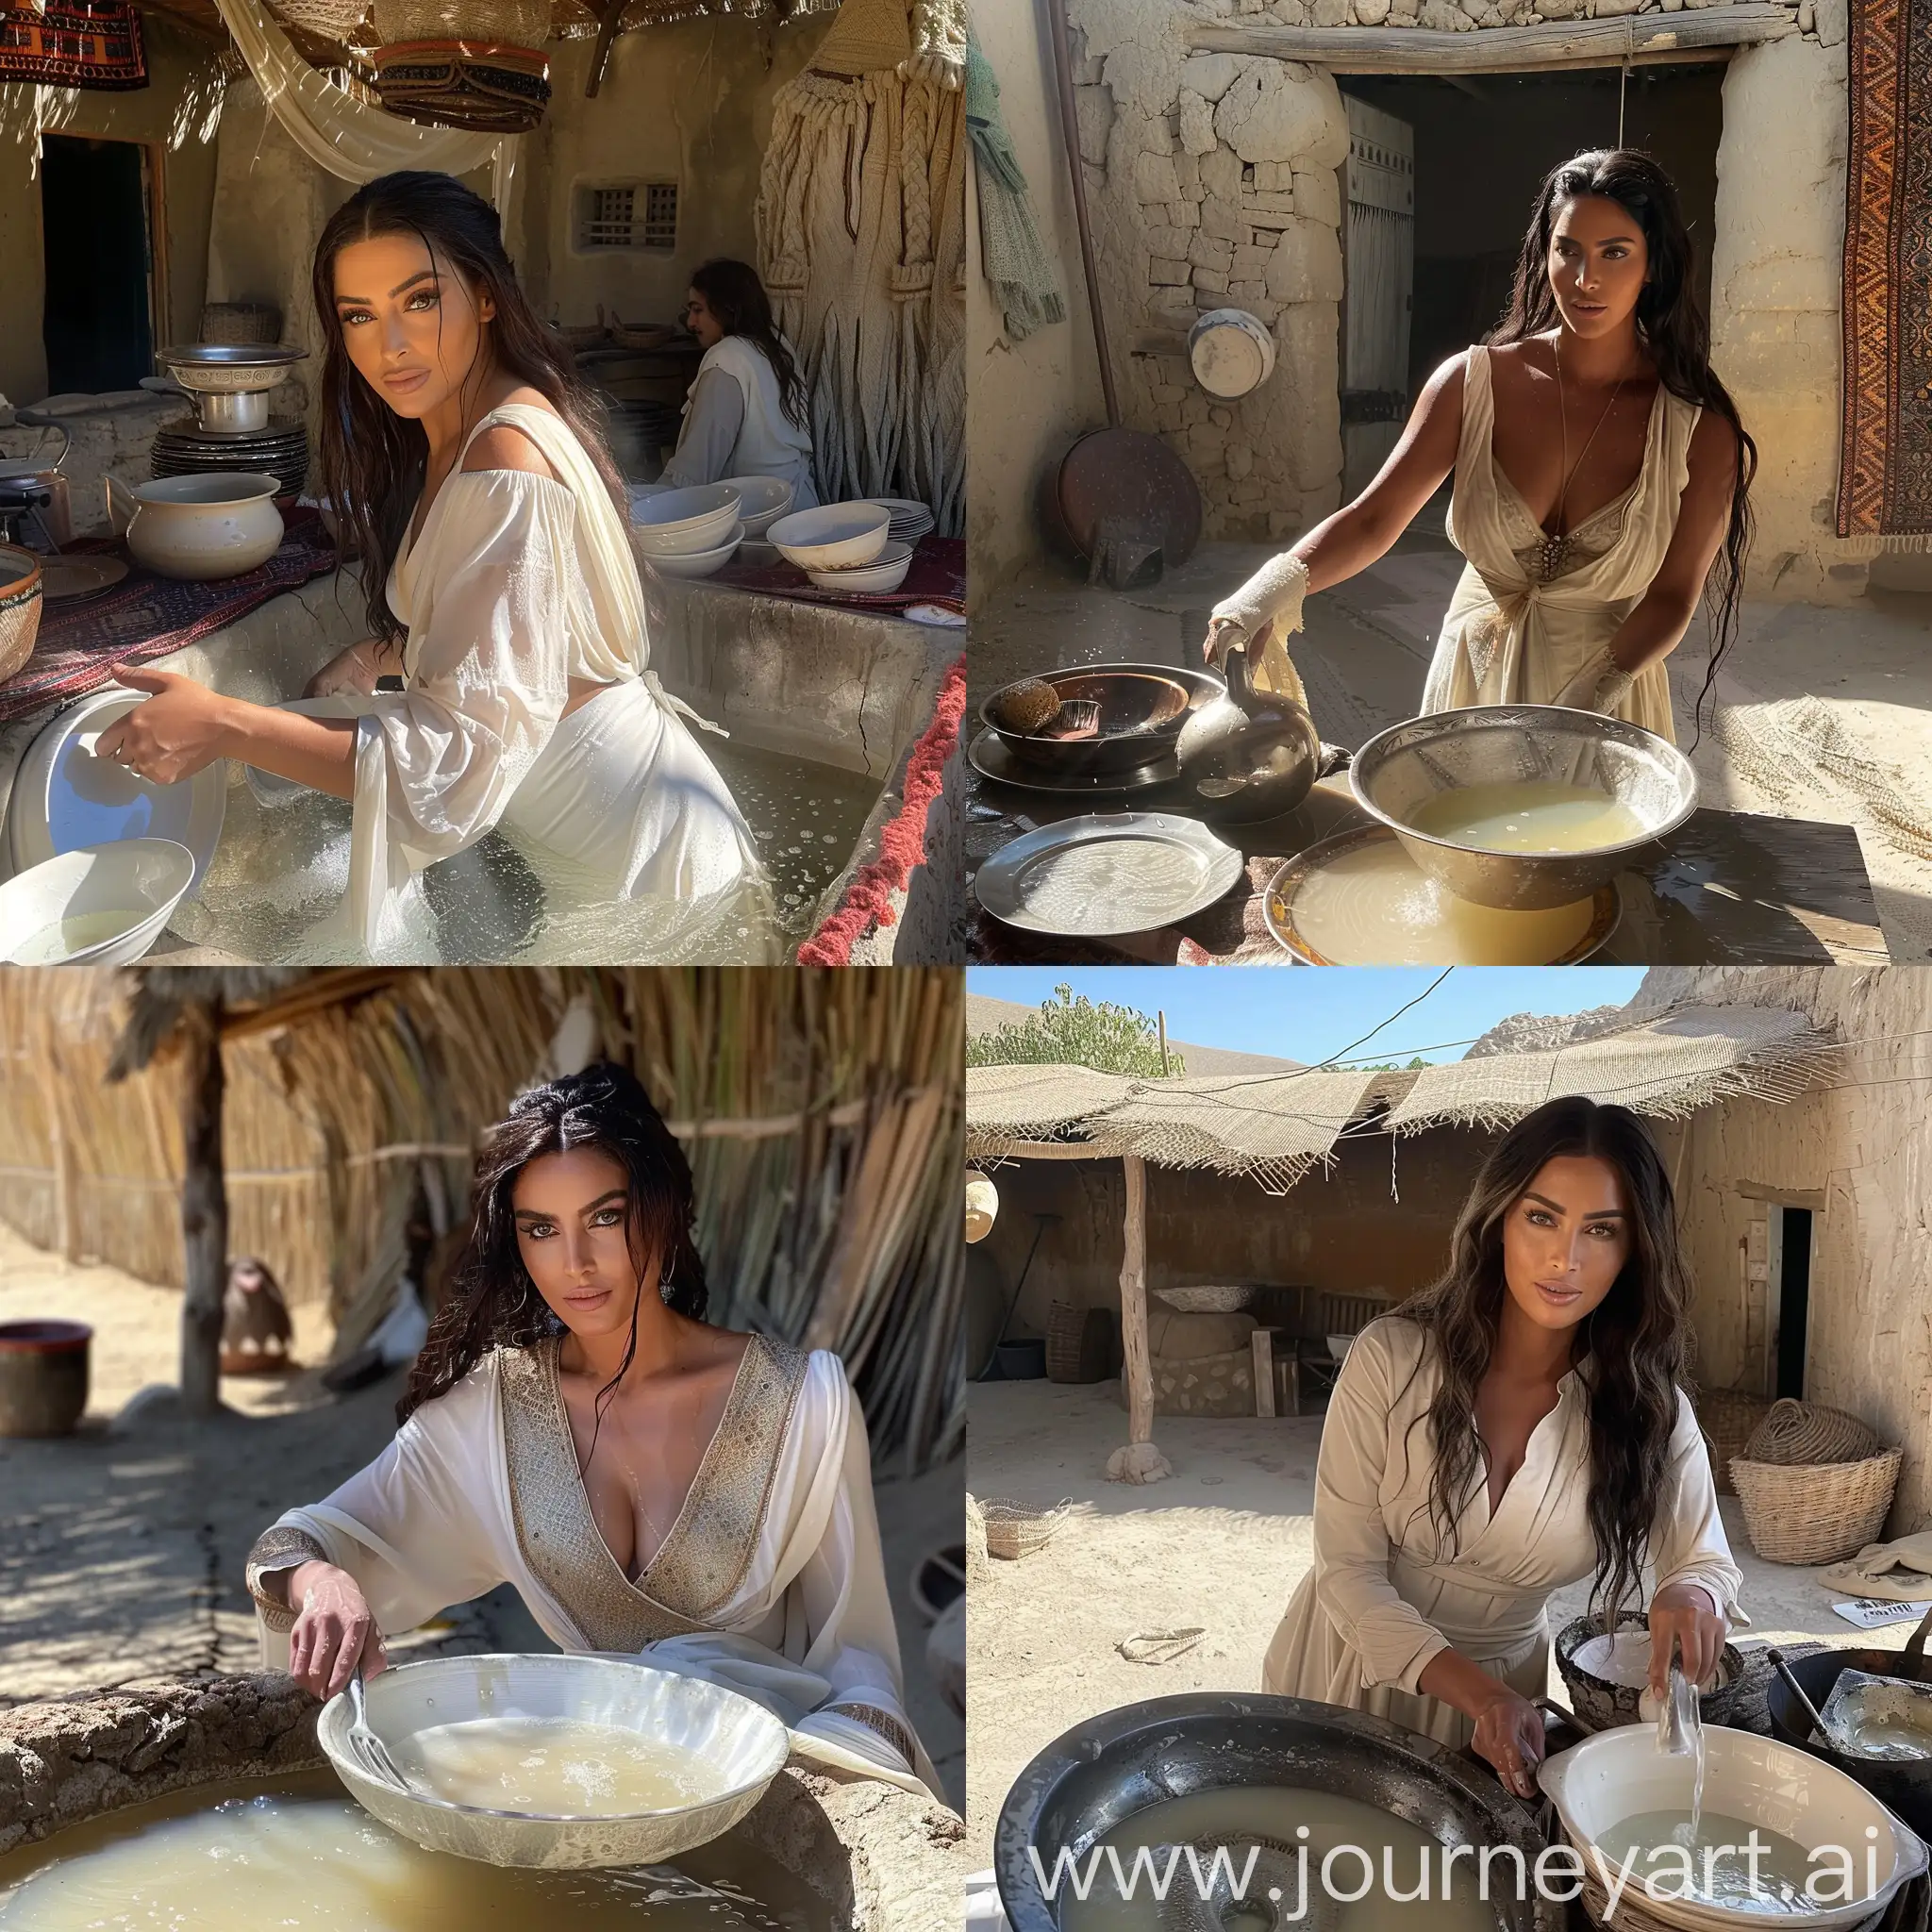 kim kardashian washing dishes in one of the iranan's village